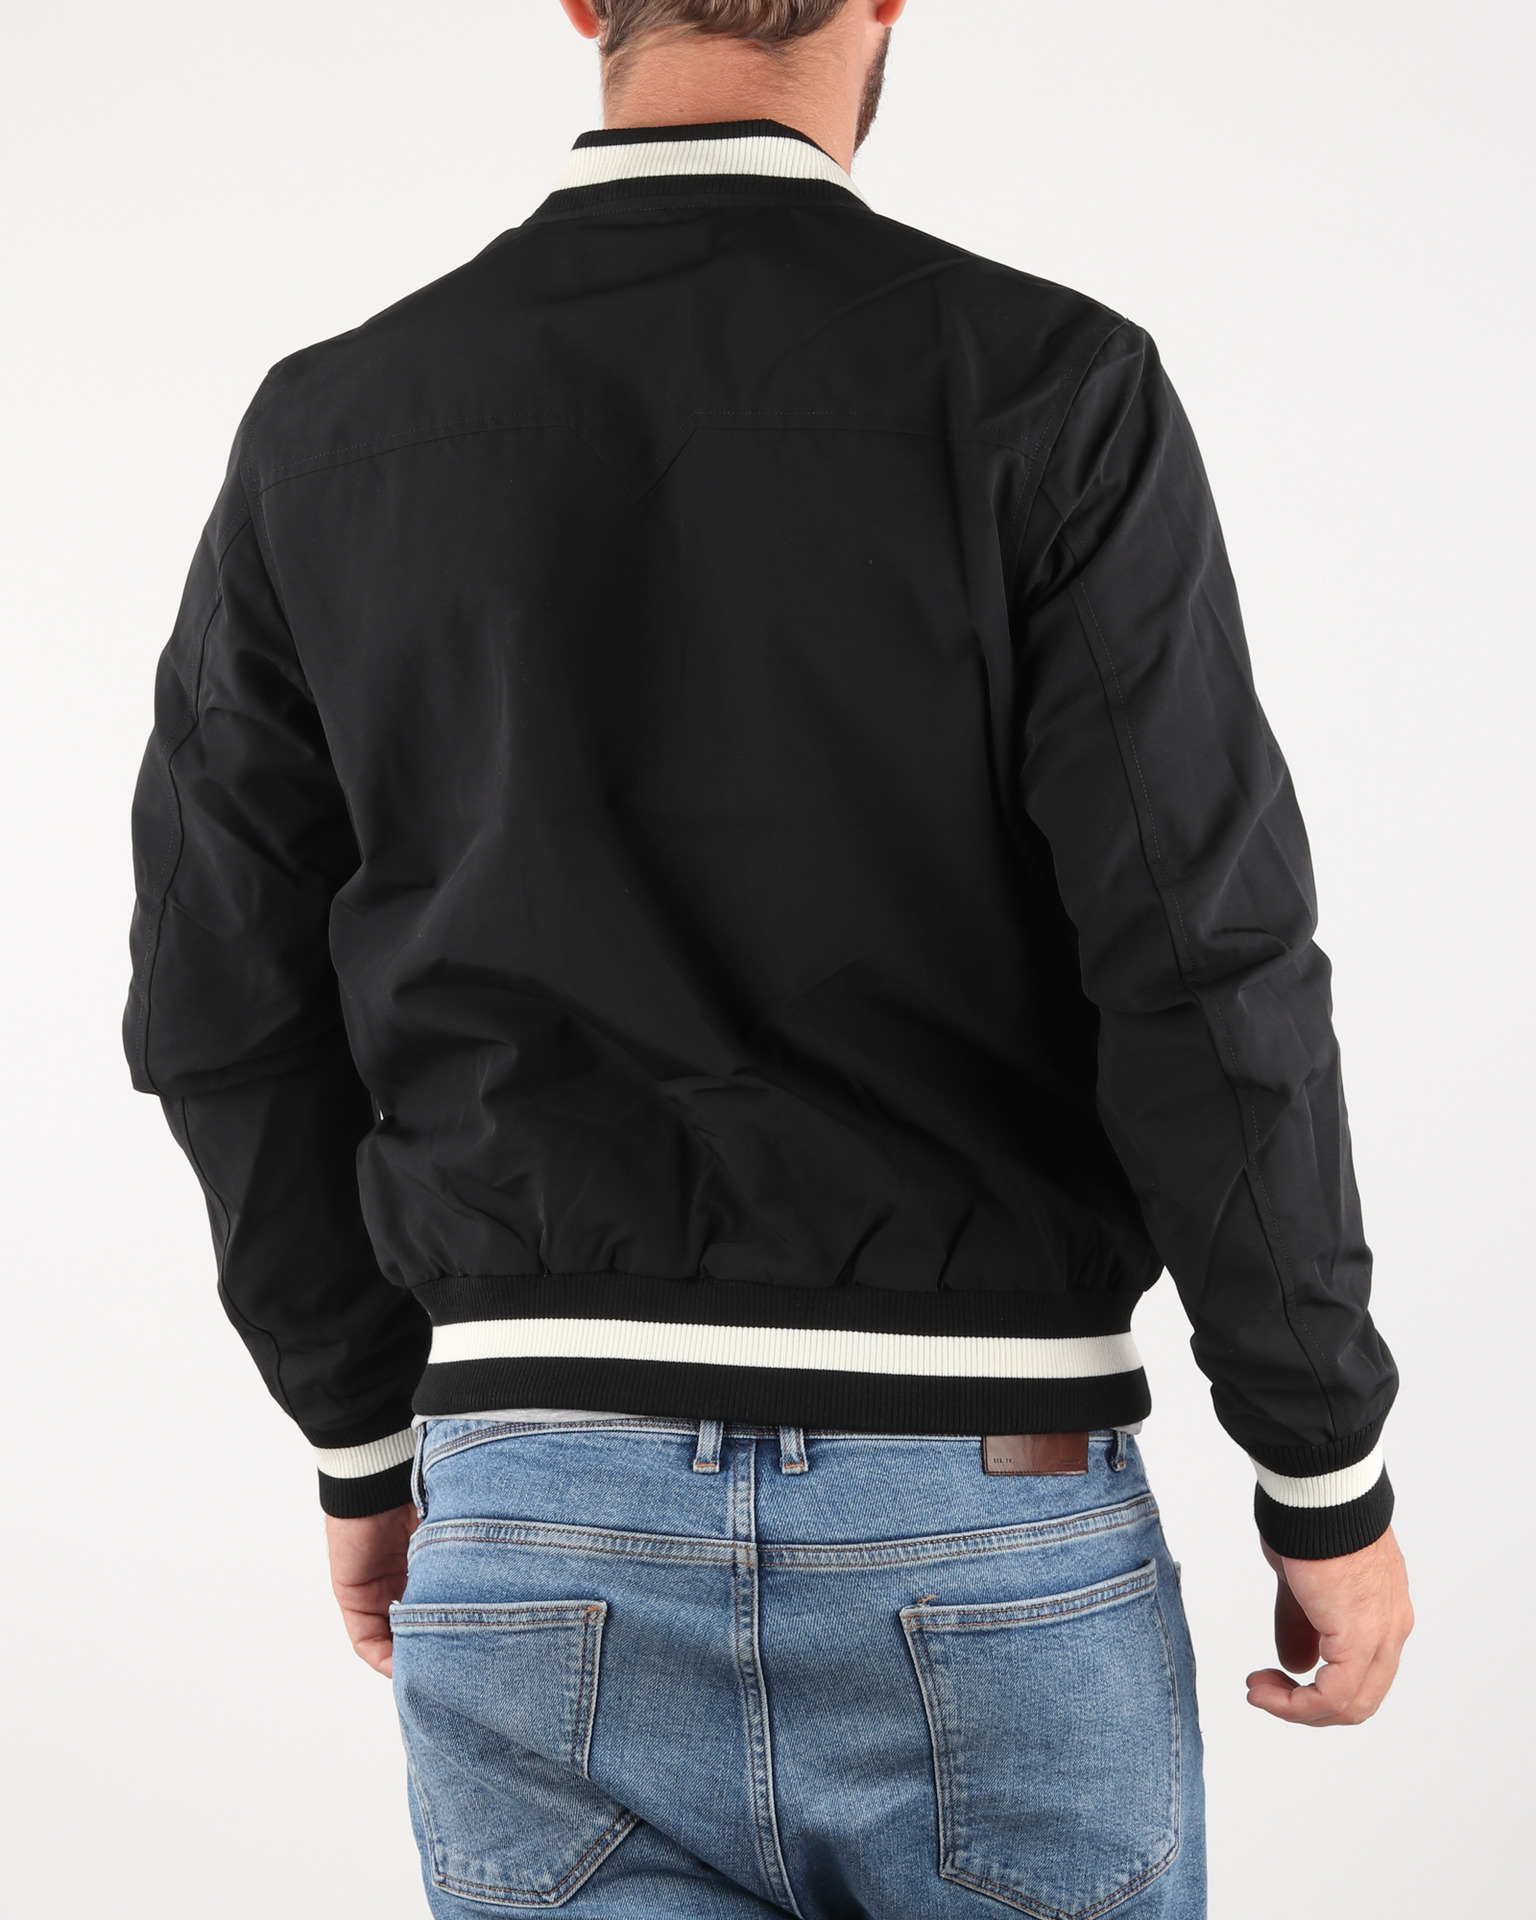 Trend Council Denim Inspiration | Studded denim jacket, Denim inspiration,  Outfits